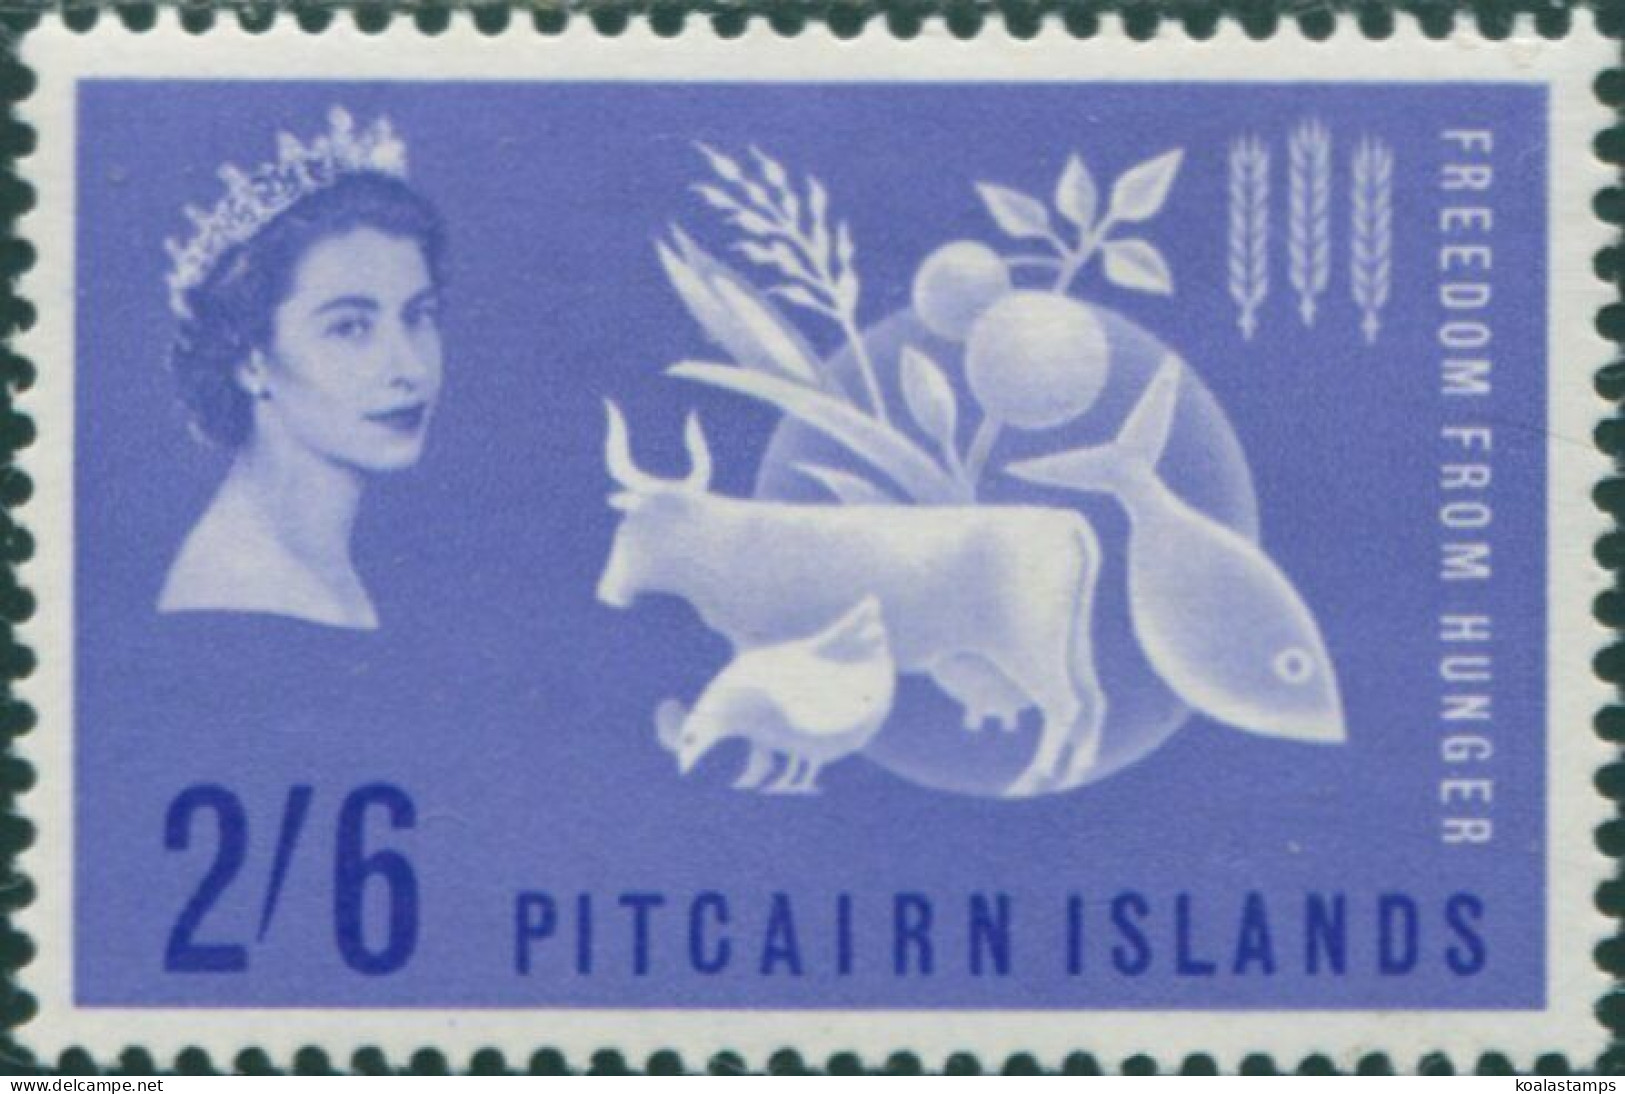 Pitcairn Islands 1963 SG32 2/6d Freedom From Hunger MNH - Pitcairn Islands